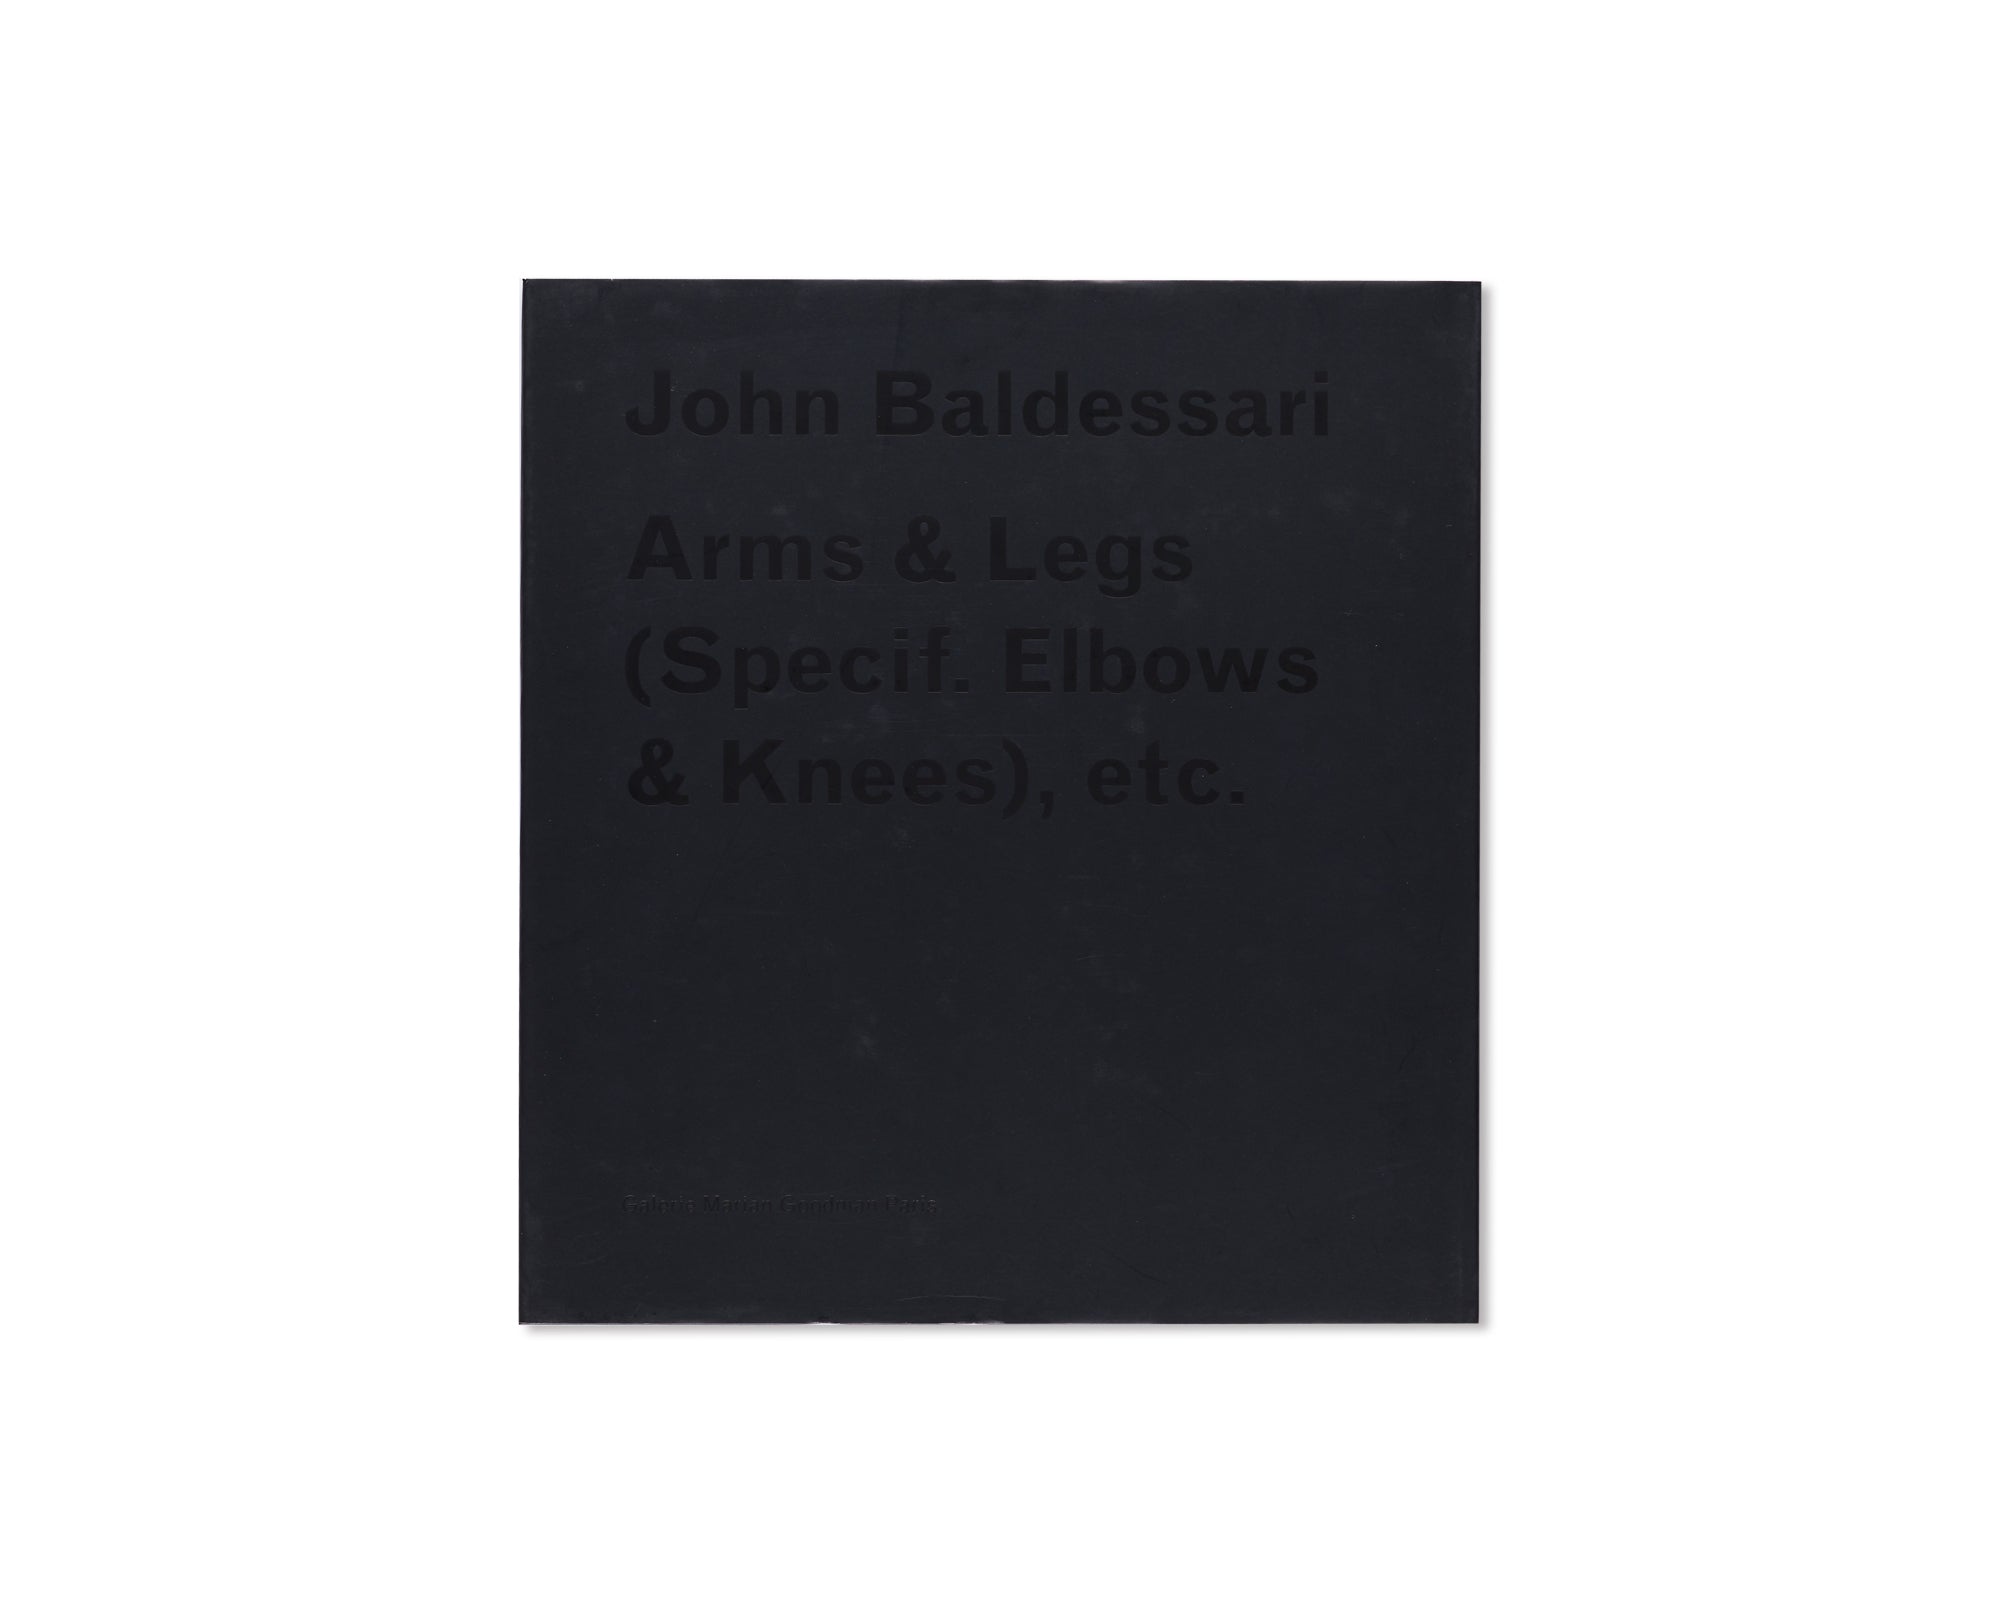 ARMS AND LEGS (SPECIF. ELBOWS & KNEES), ETC. by John Baldessari